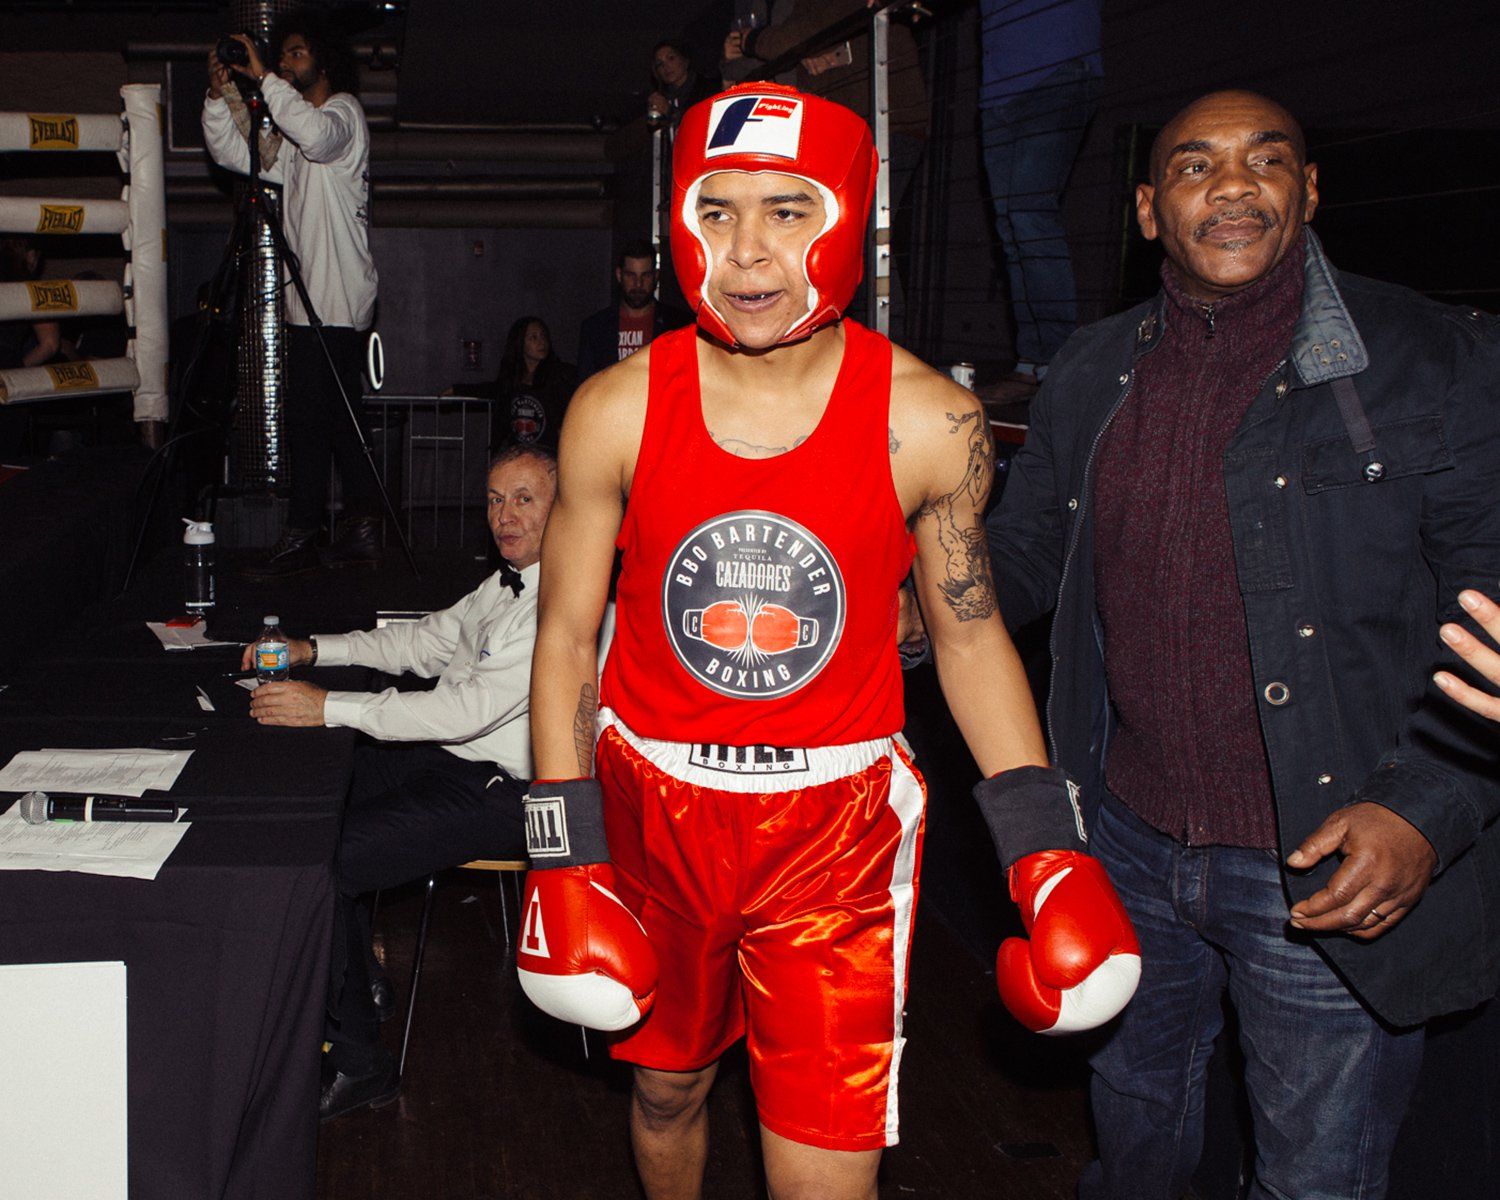 Amateur Boxing-Bartenders Boxing Association Mens Health image photo pic